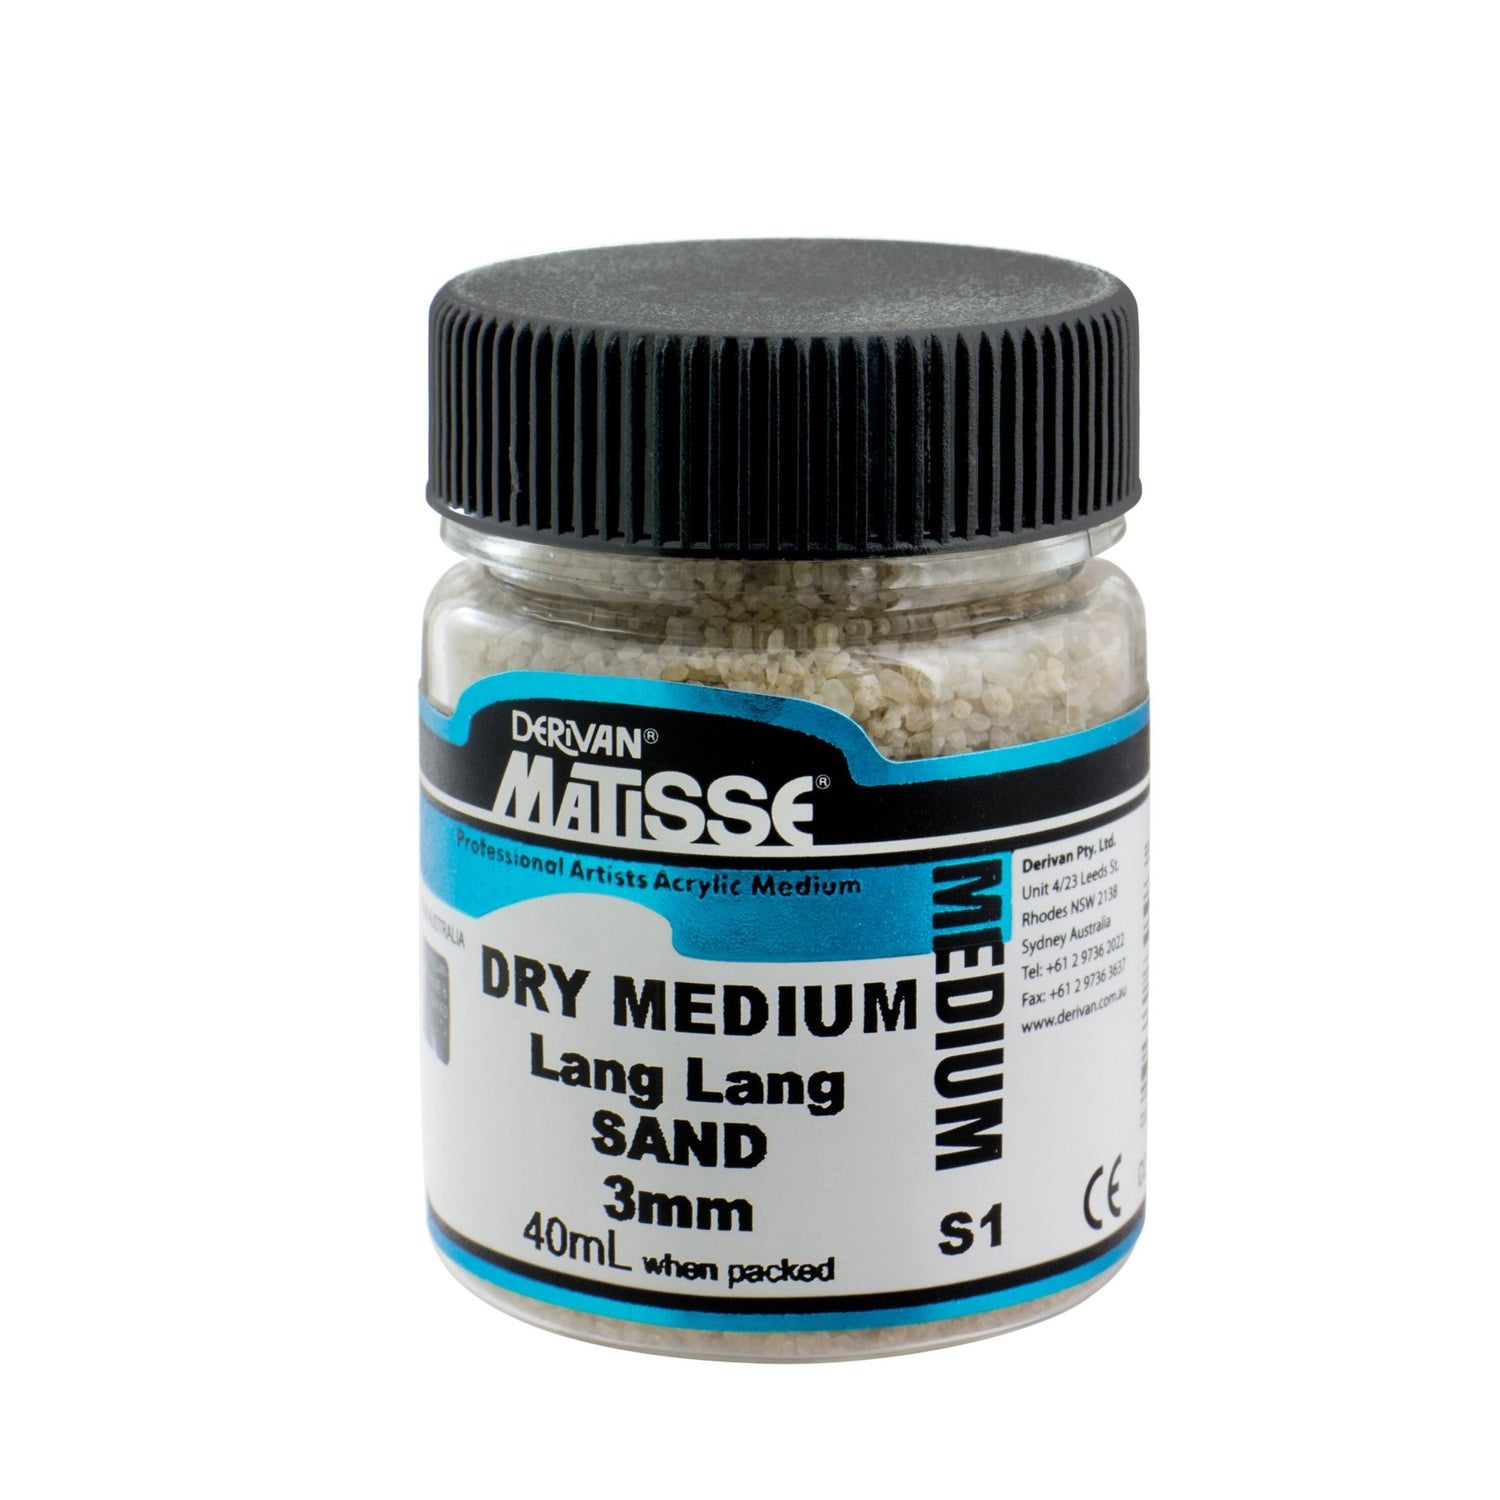 Matisse Dry Medium 40ml Lang Sand 3mm - theartshop.com.au